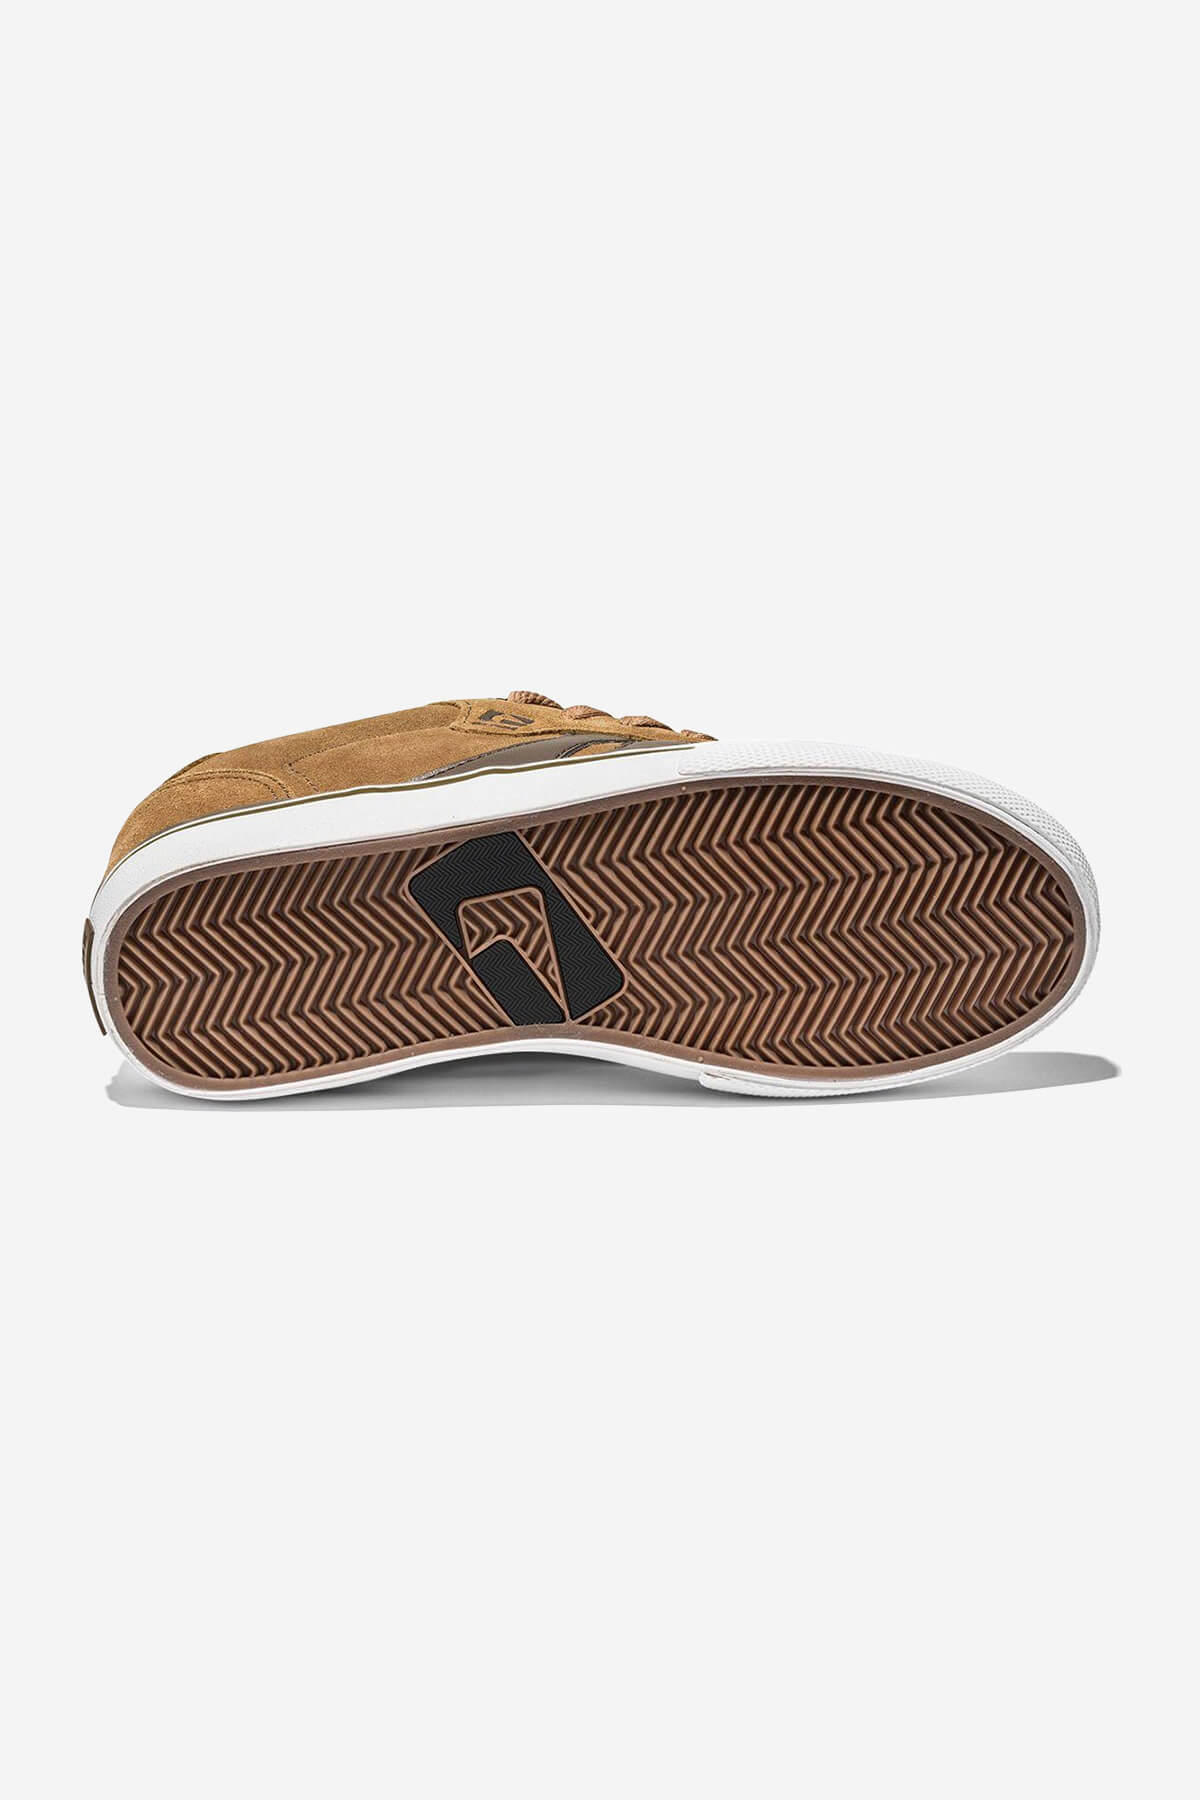 encore-2 tan braun skateboard Schuhe